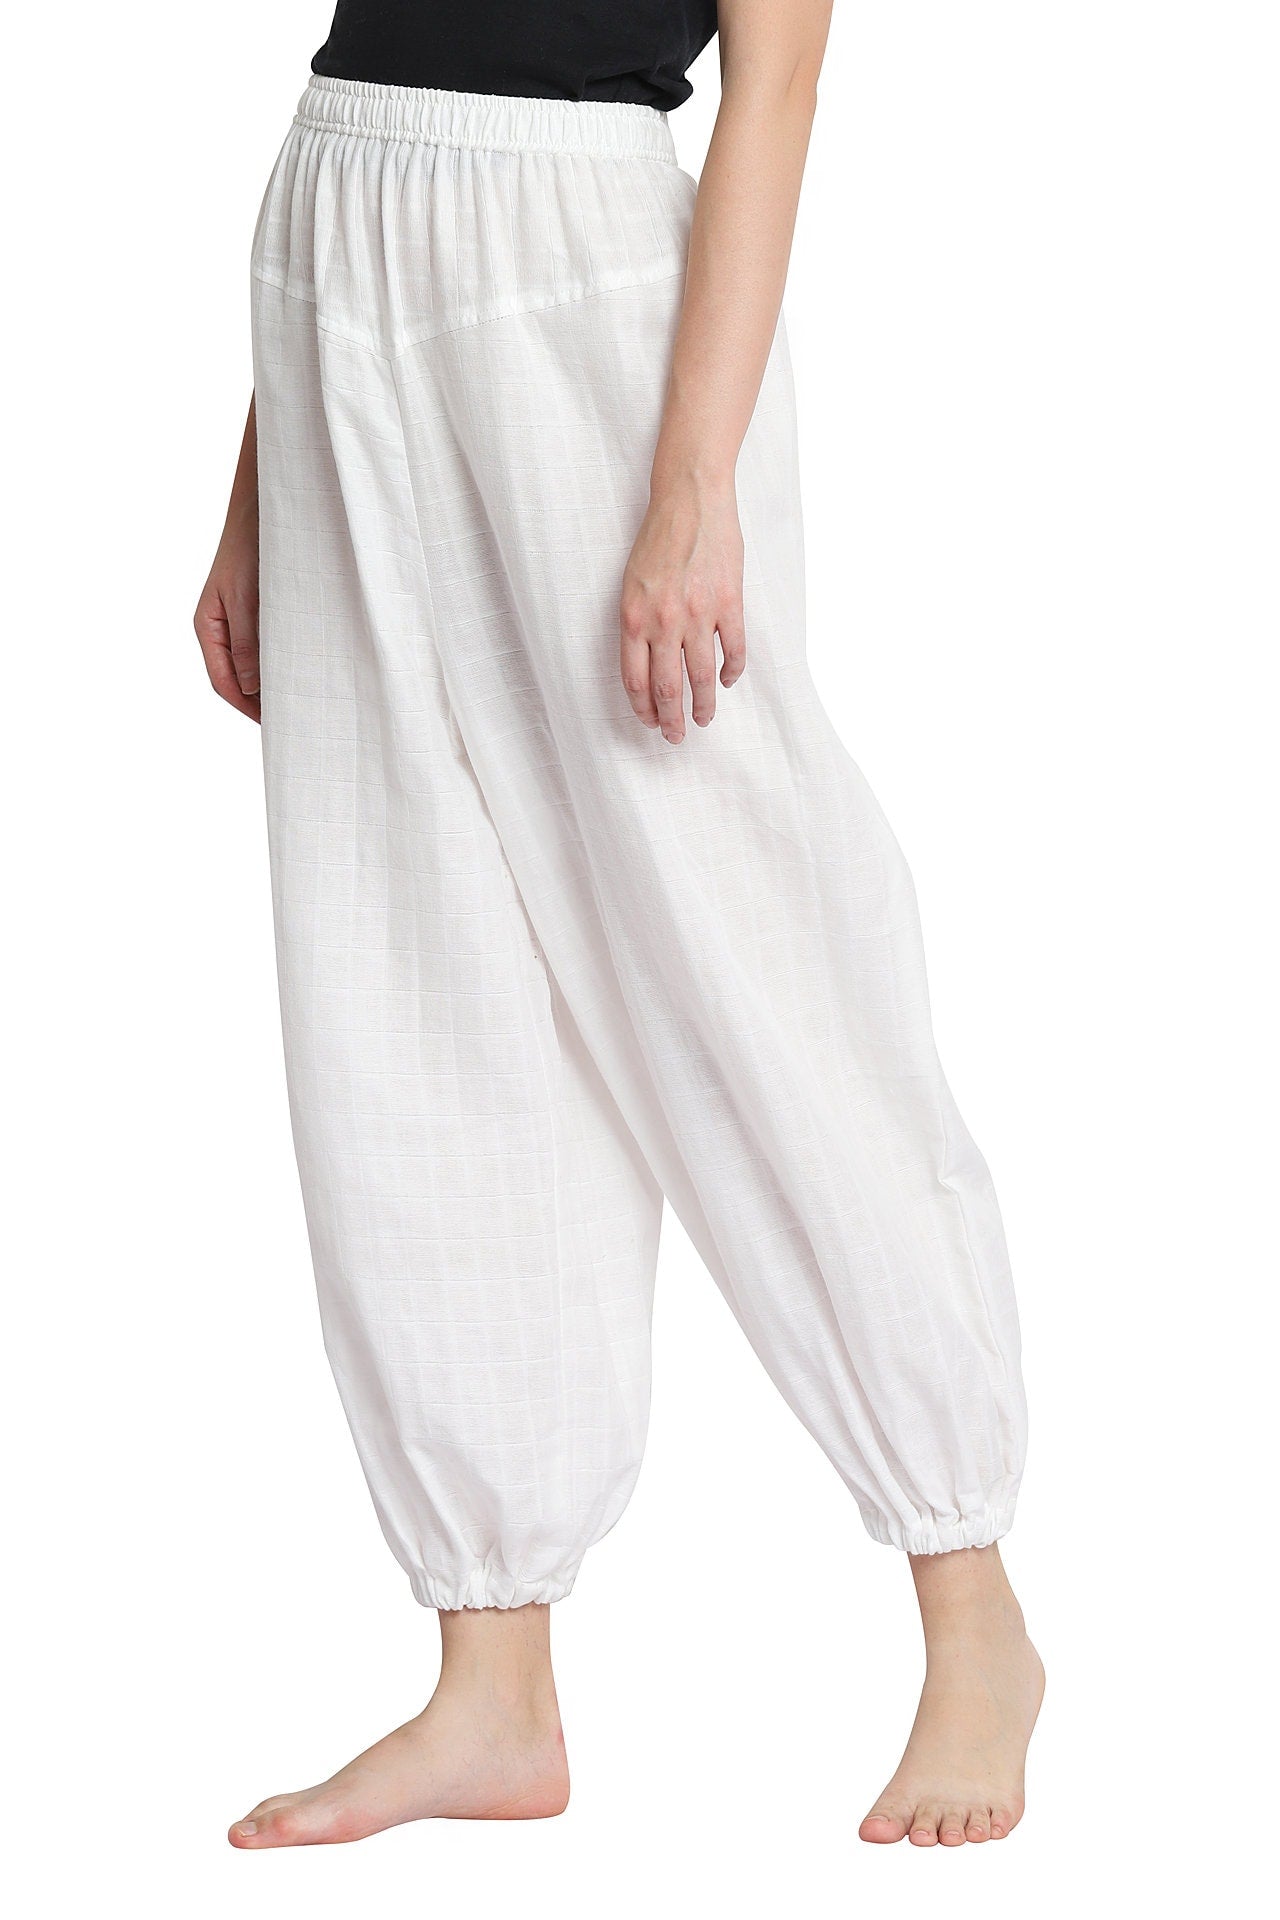 Indian Striped Harem Yoga Pants  Yoga clothes boho, Diy yoga